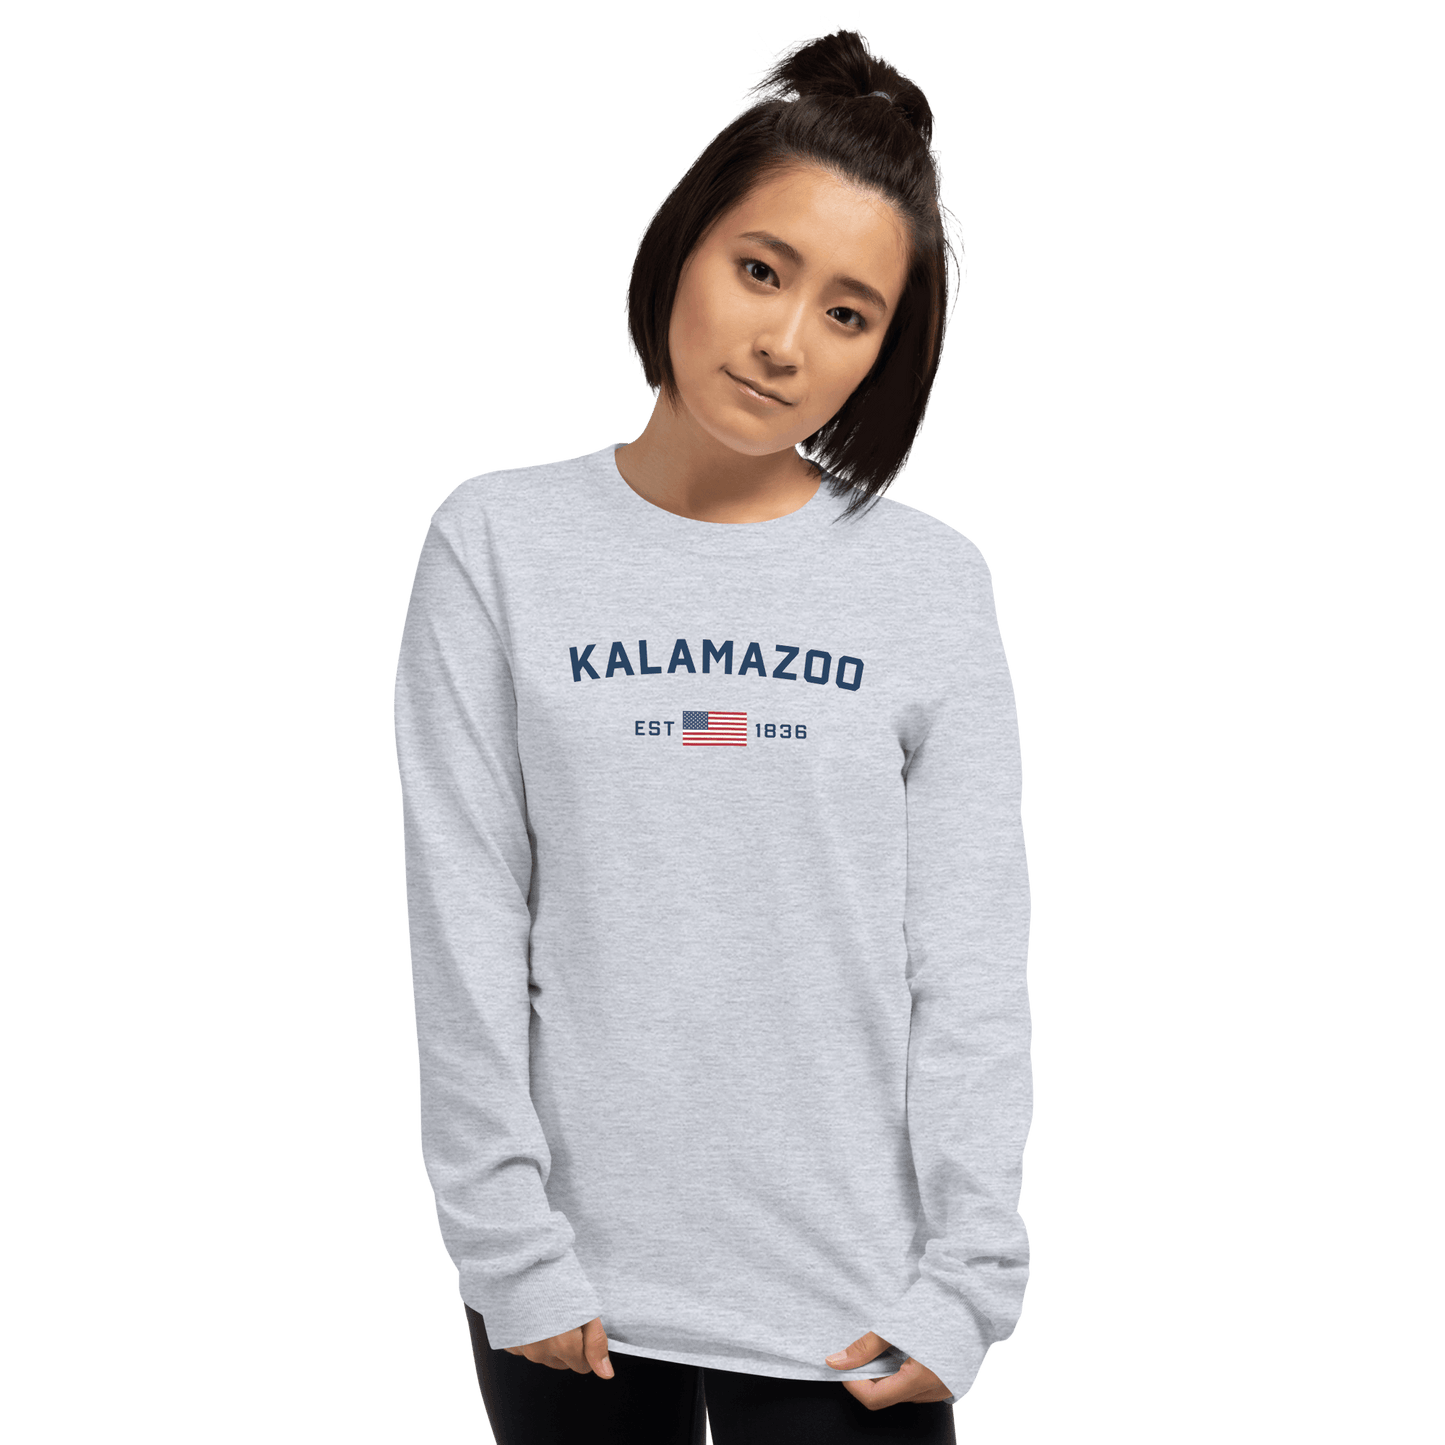 'Kalamazoo EST 1836' T-Shirt | Unisex Long Sleeve - Circumspice Michigan